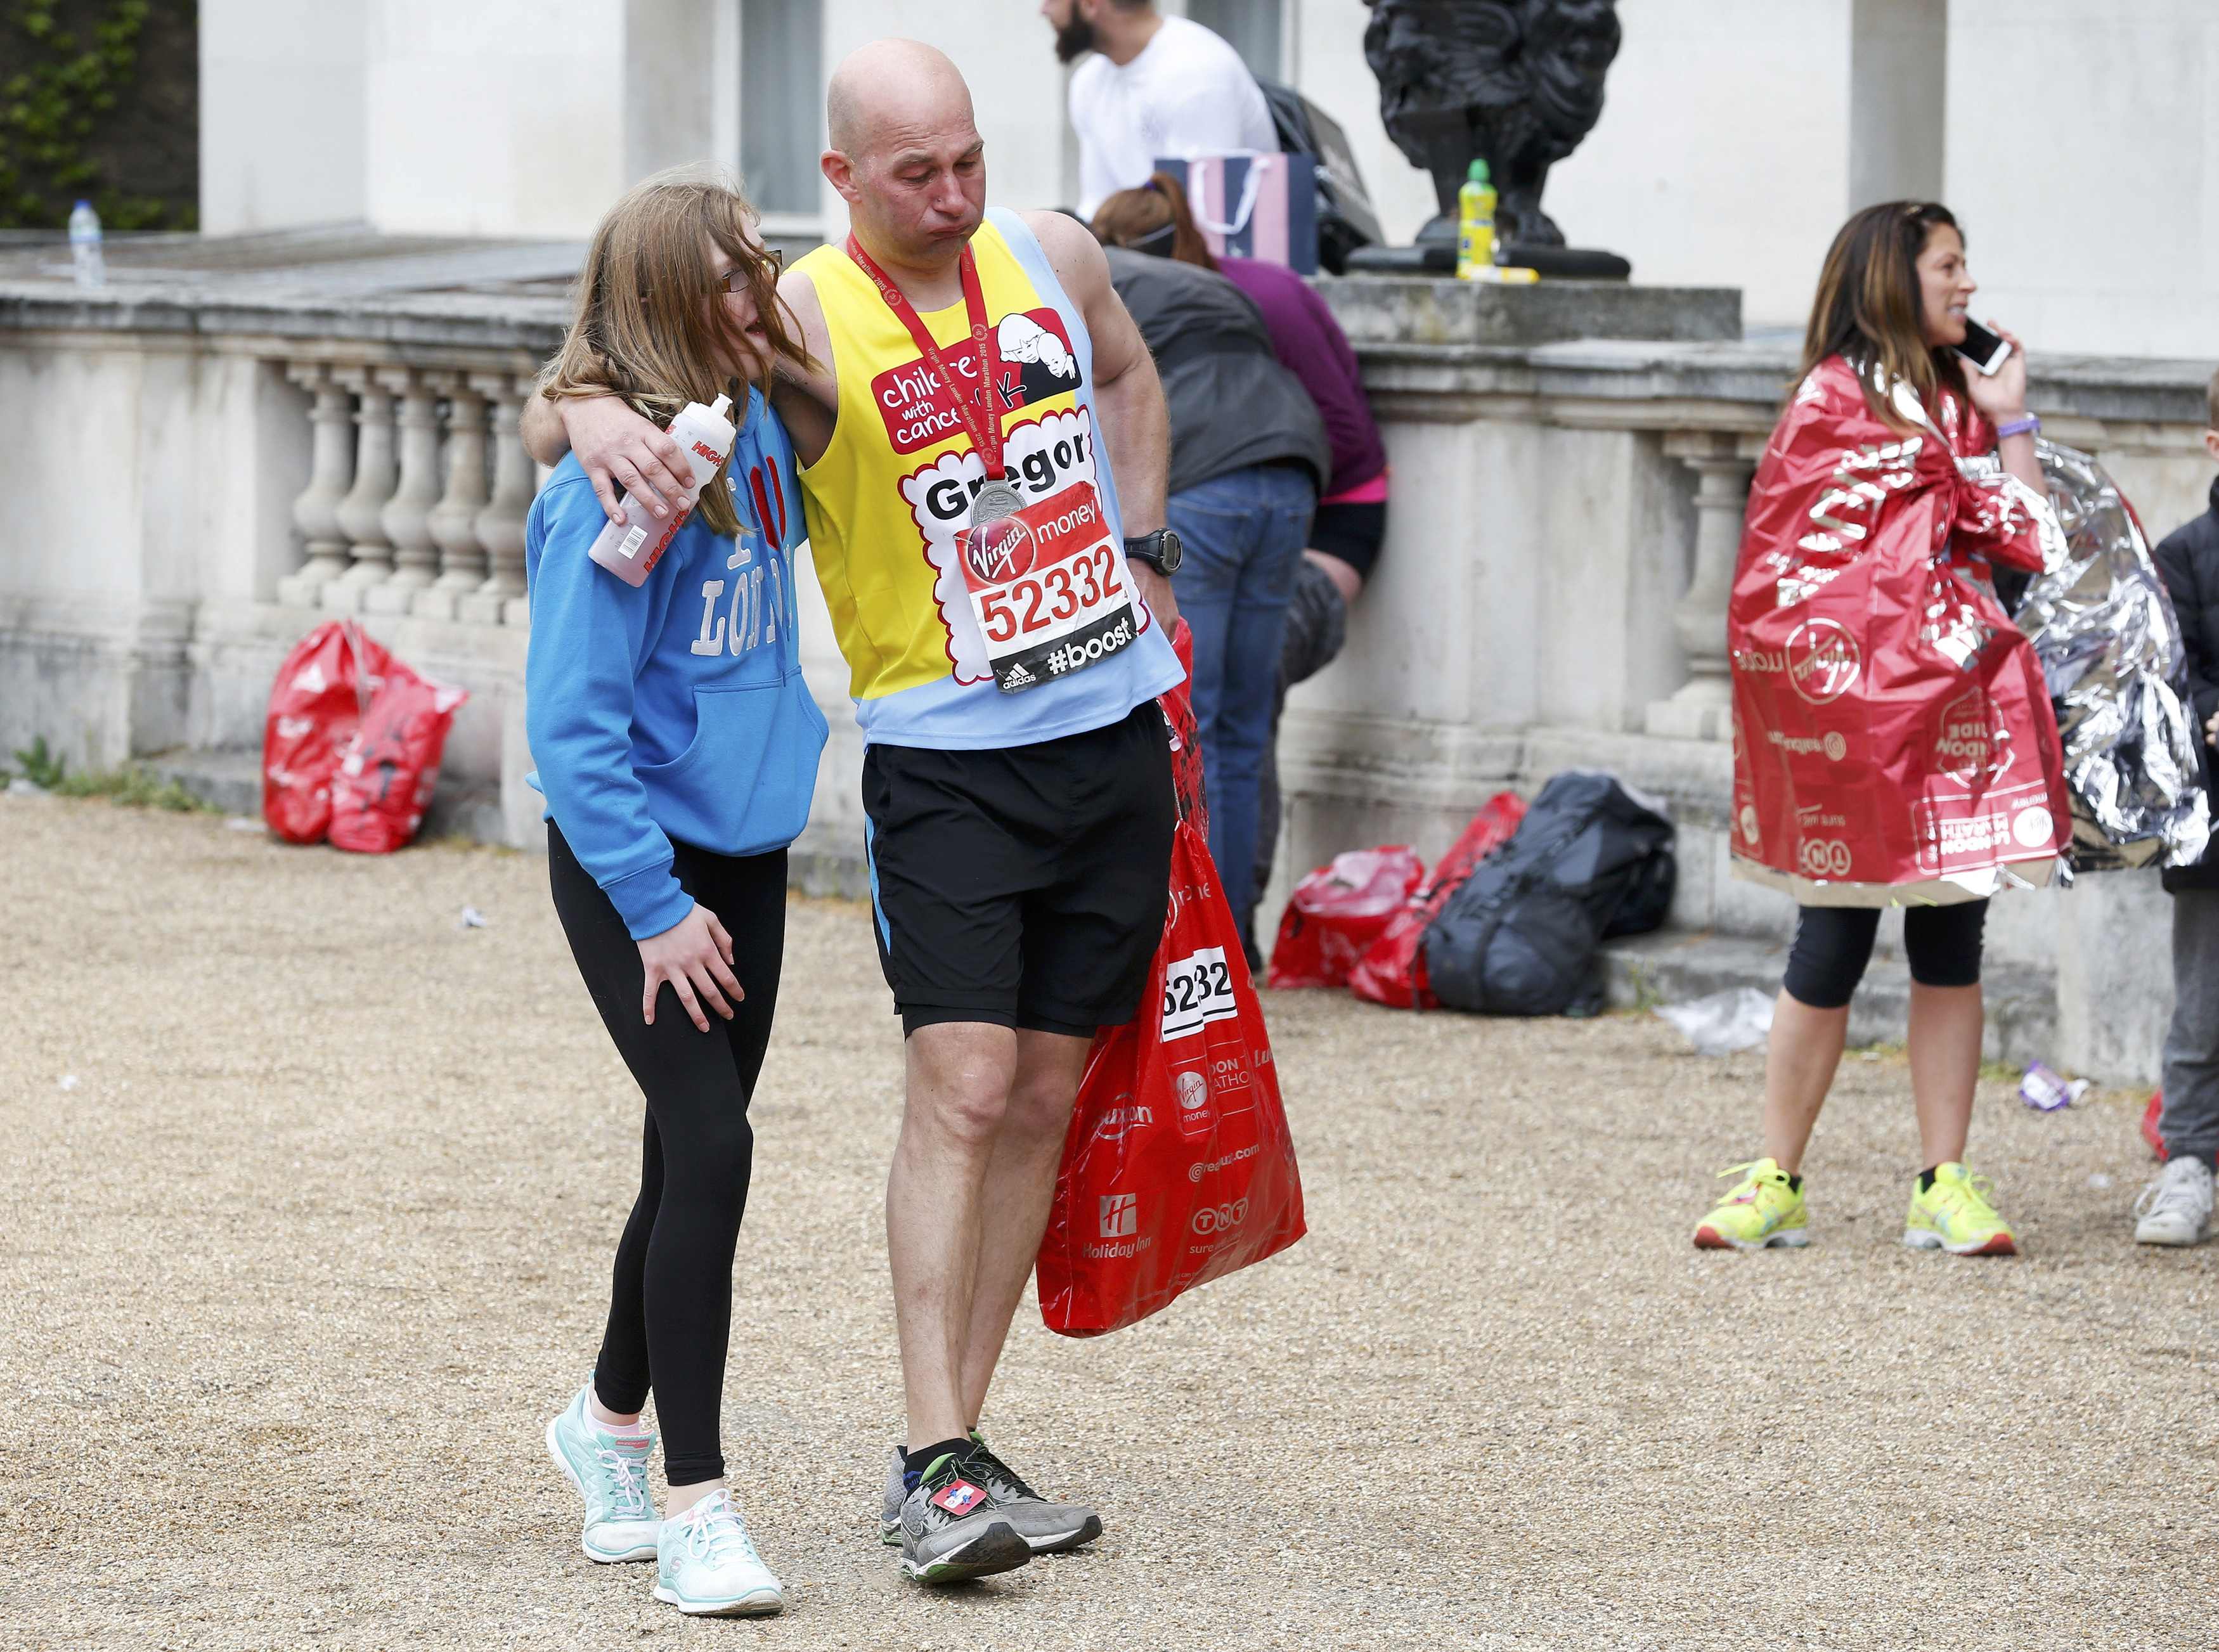 A runner gets a little help after finishing the London Marathon